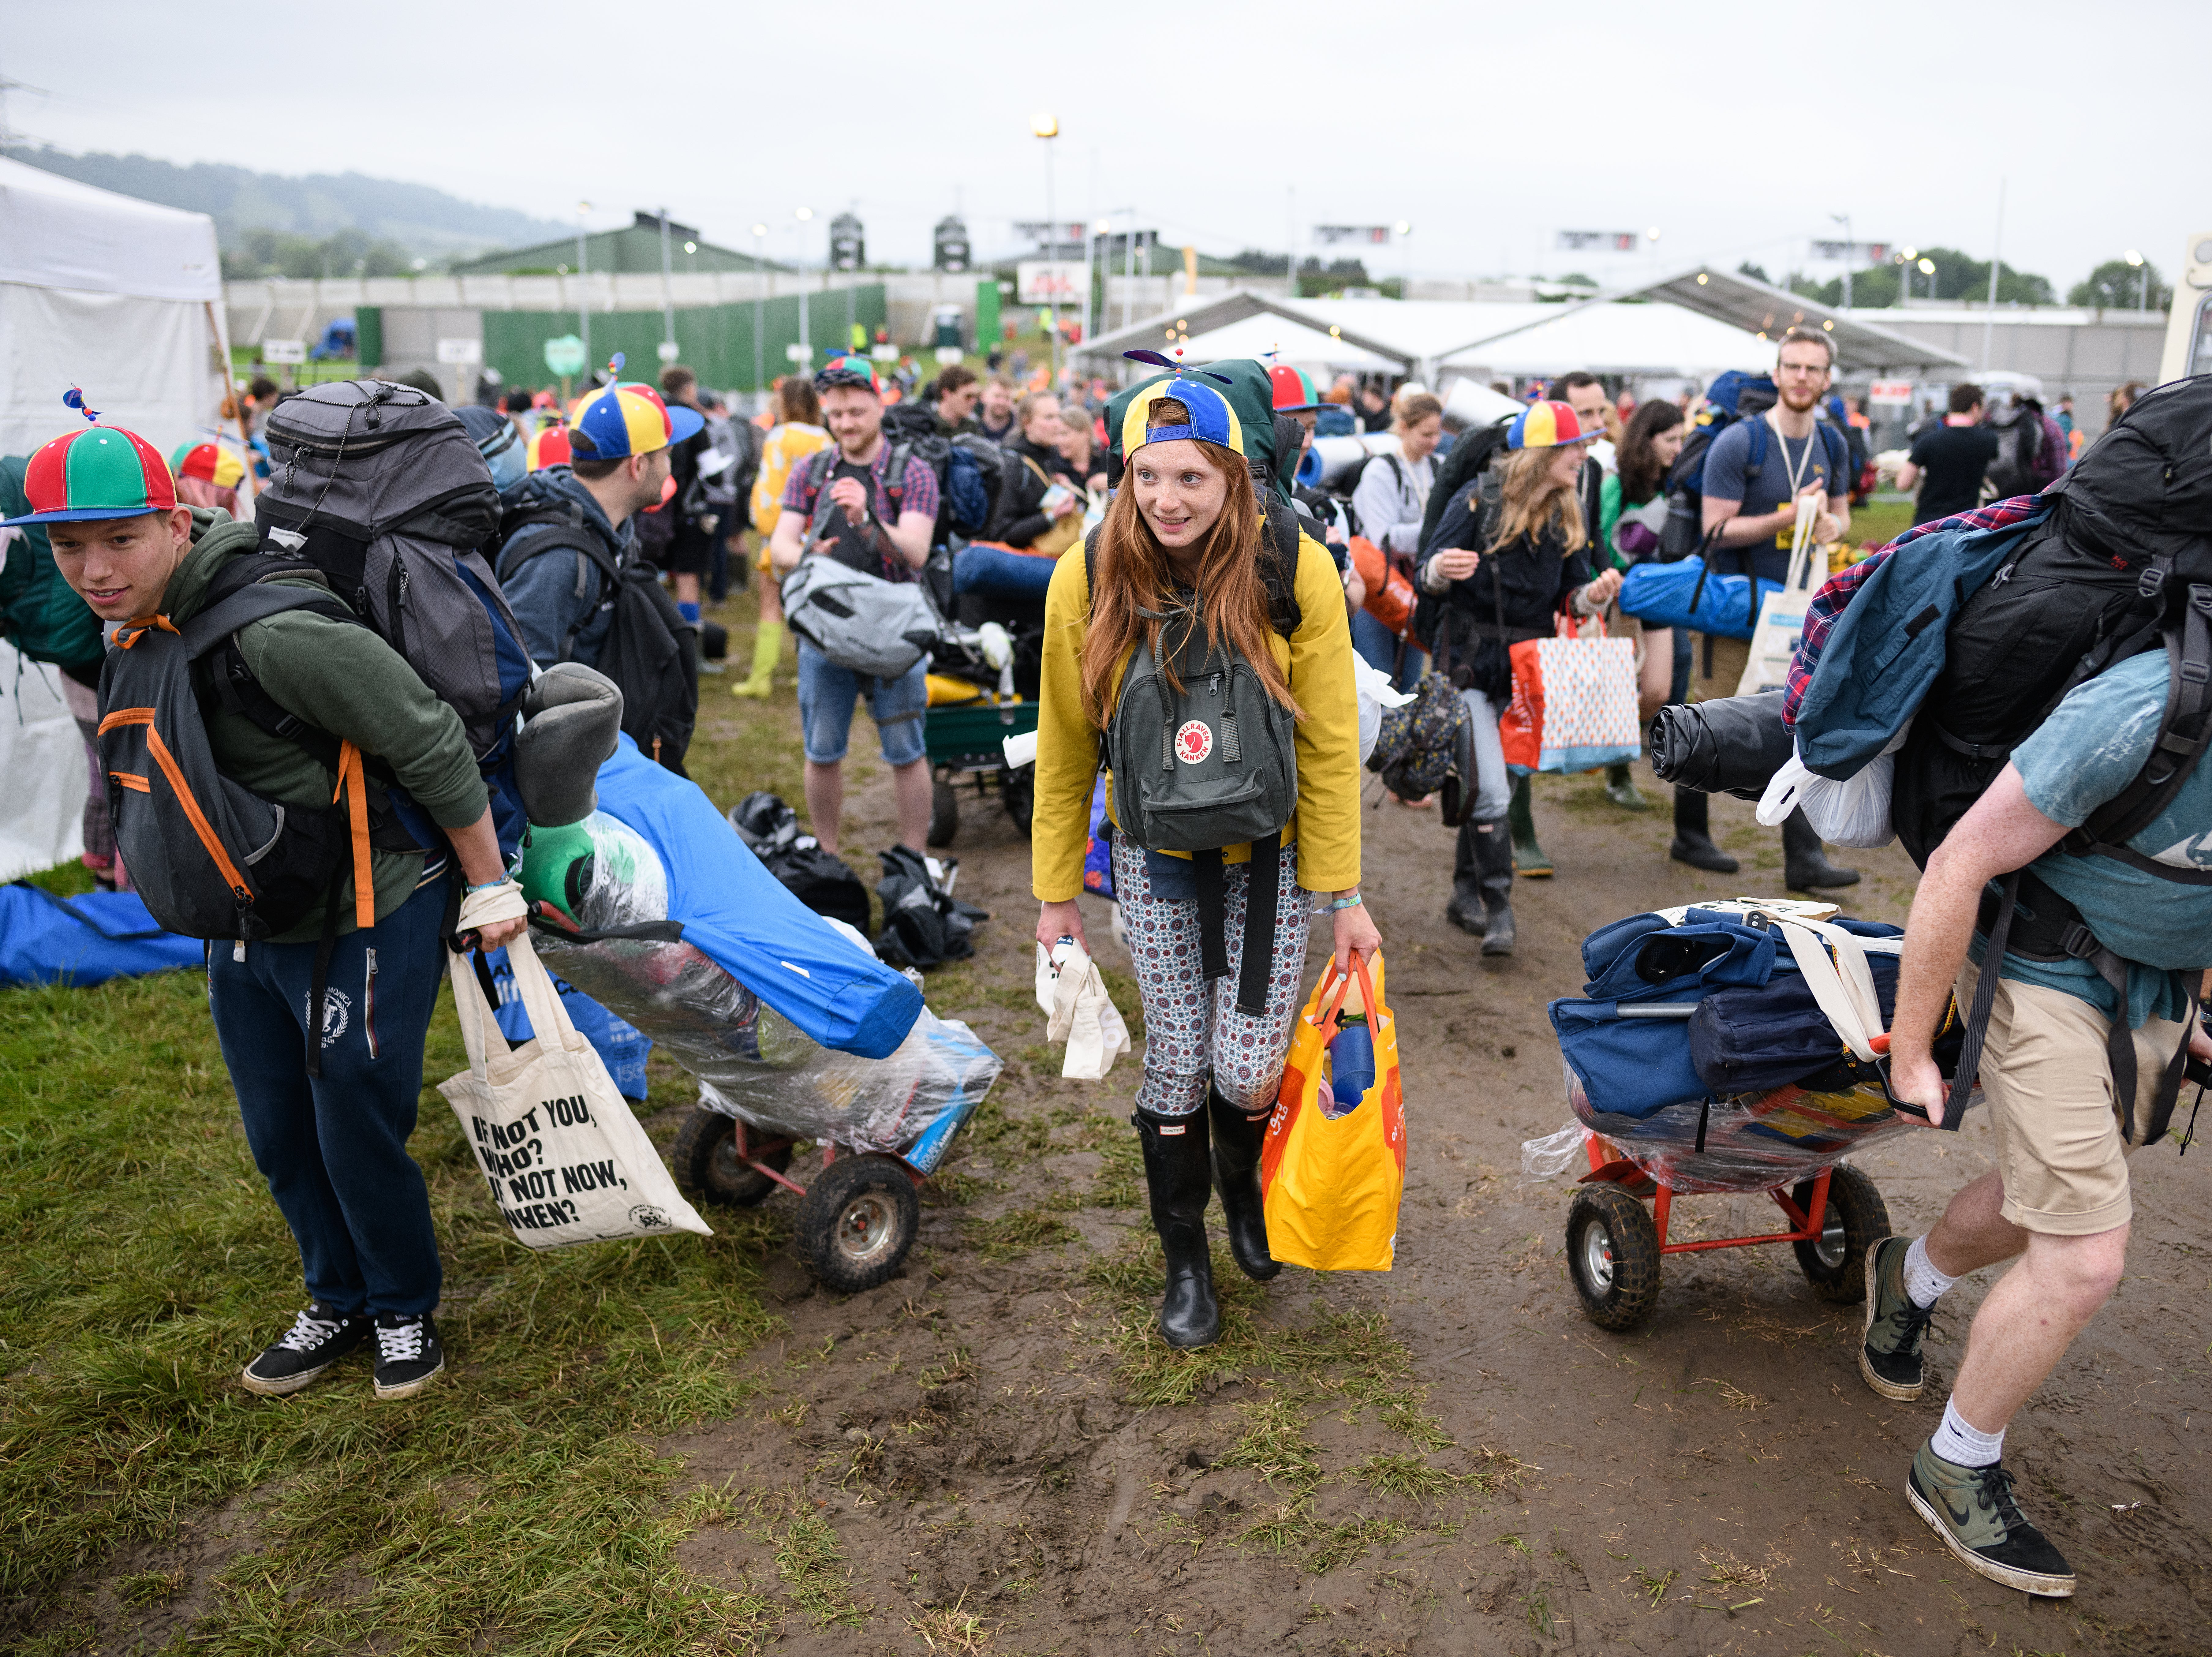 Festivalgoers arrive at Glastonbury’s site in 2019